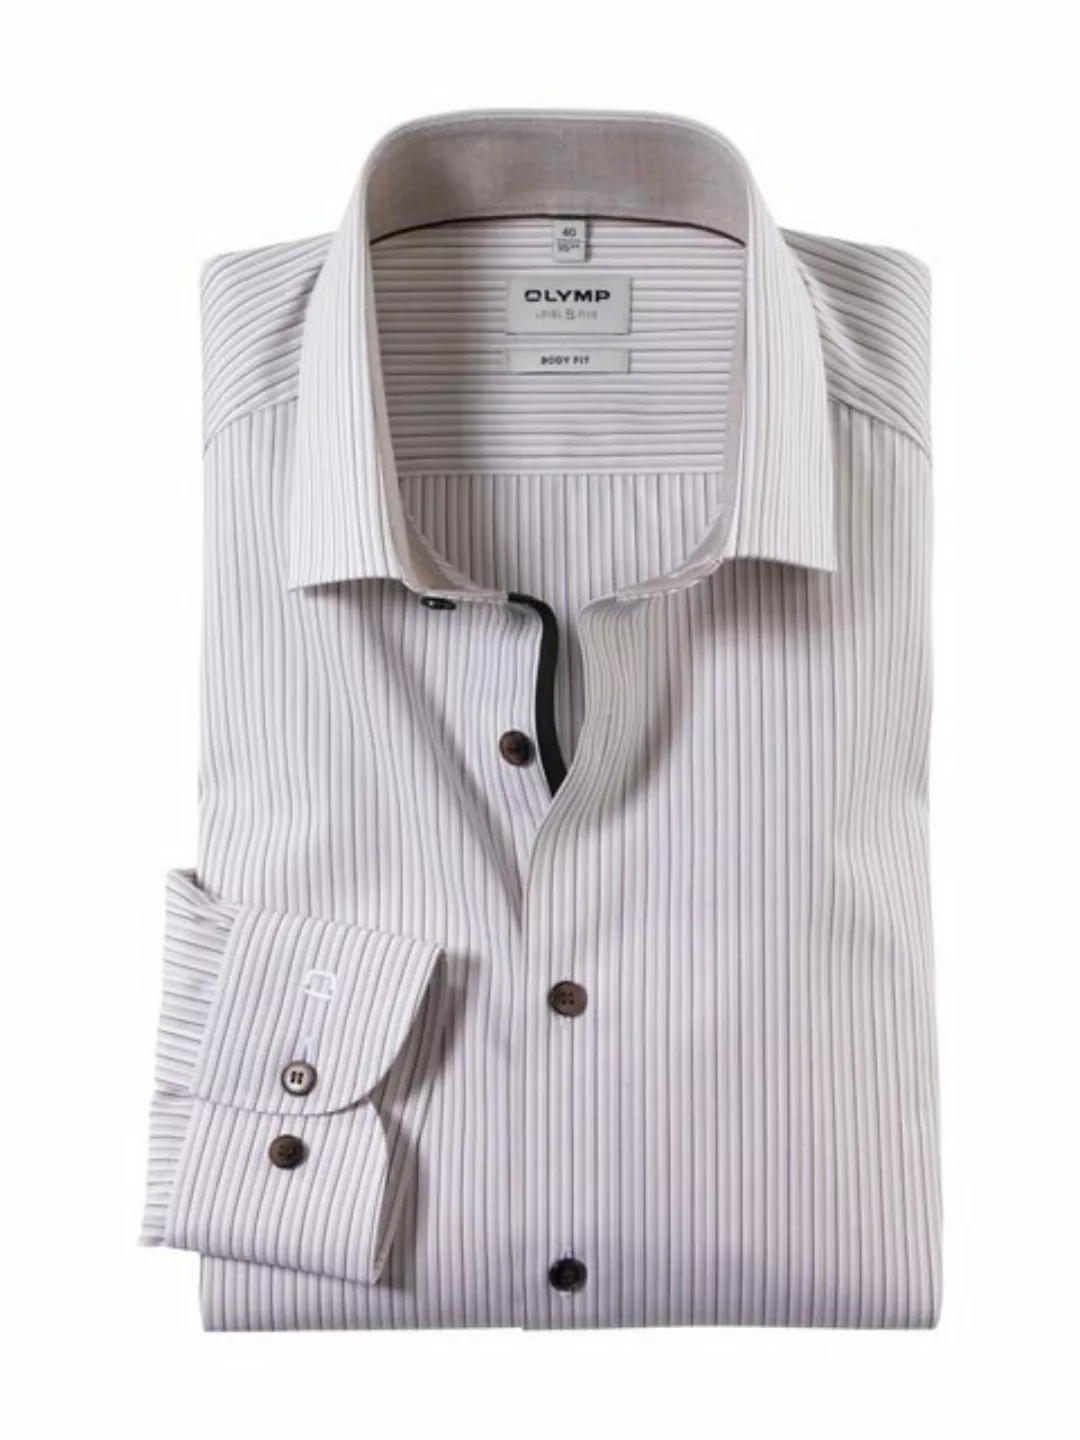 OLYMP Businesshemd - Level Five - langarm Hemd - minimal Stripe - body fit günstig online kaufen